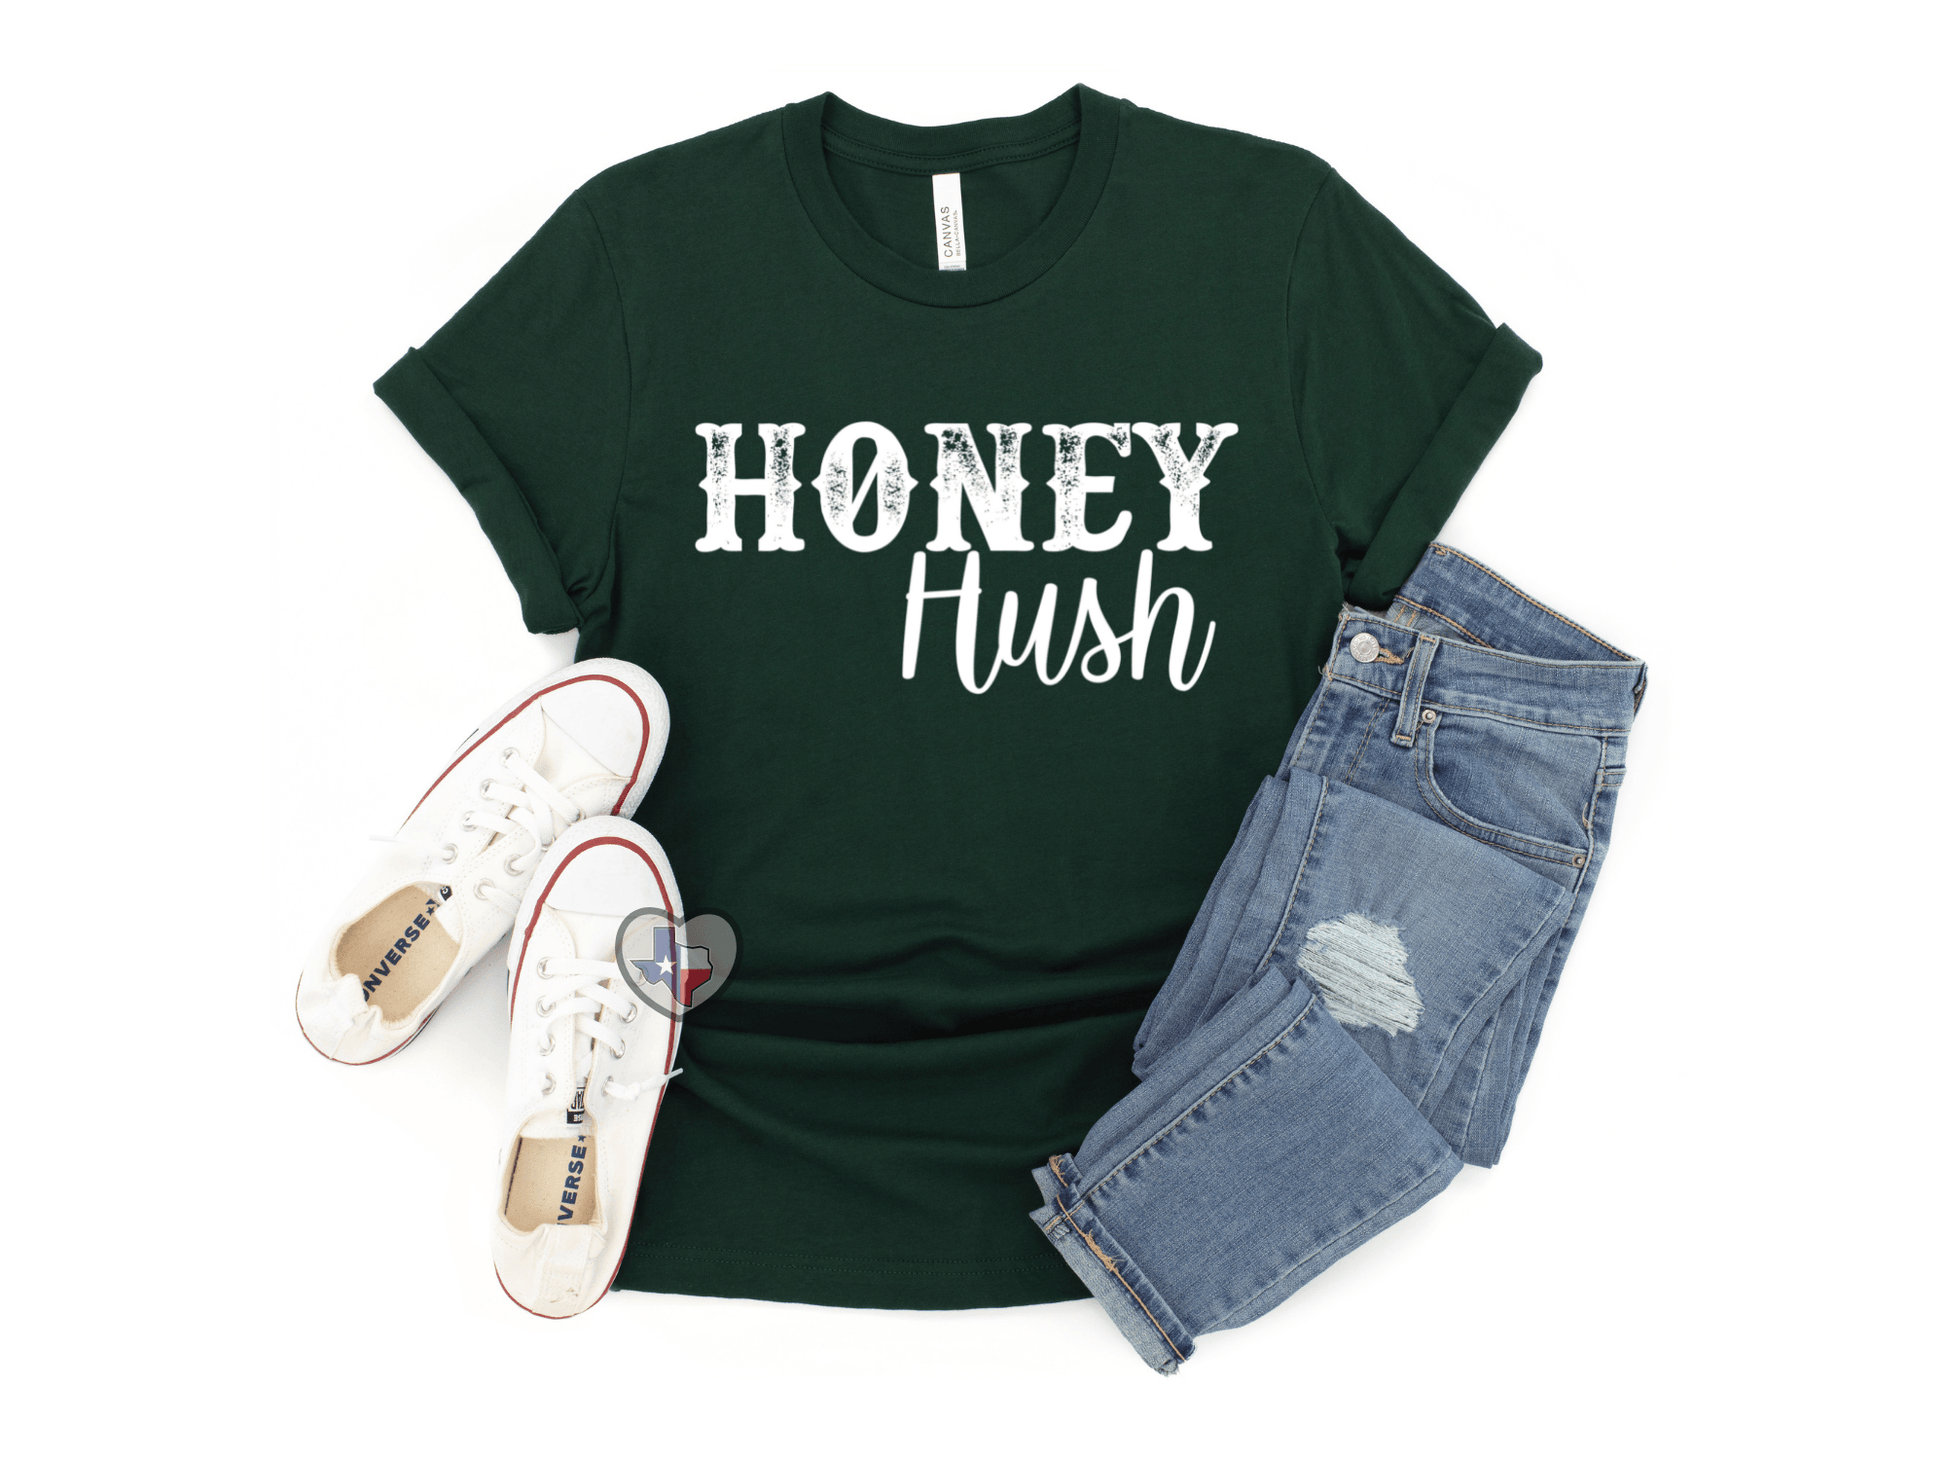 Honey Hush - Texas Transfers and Designs